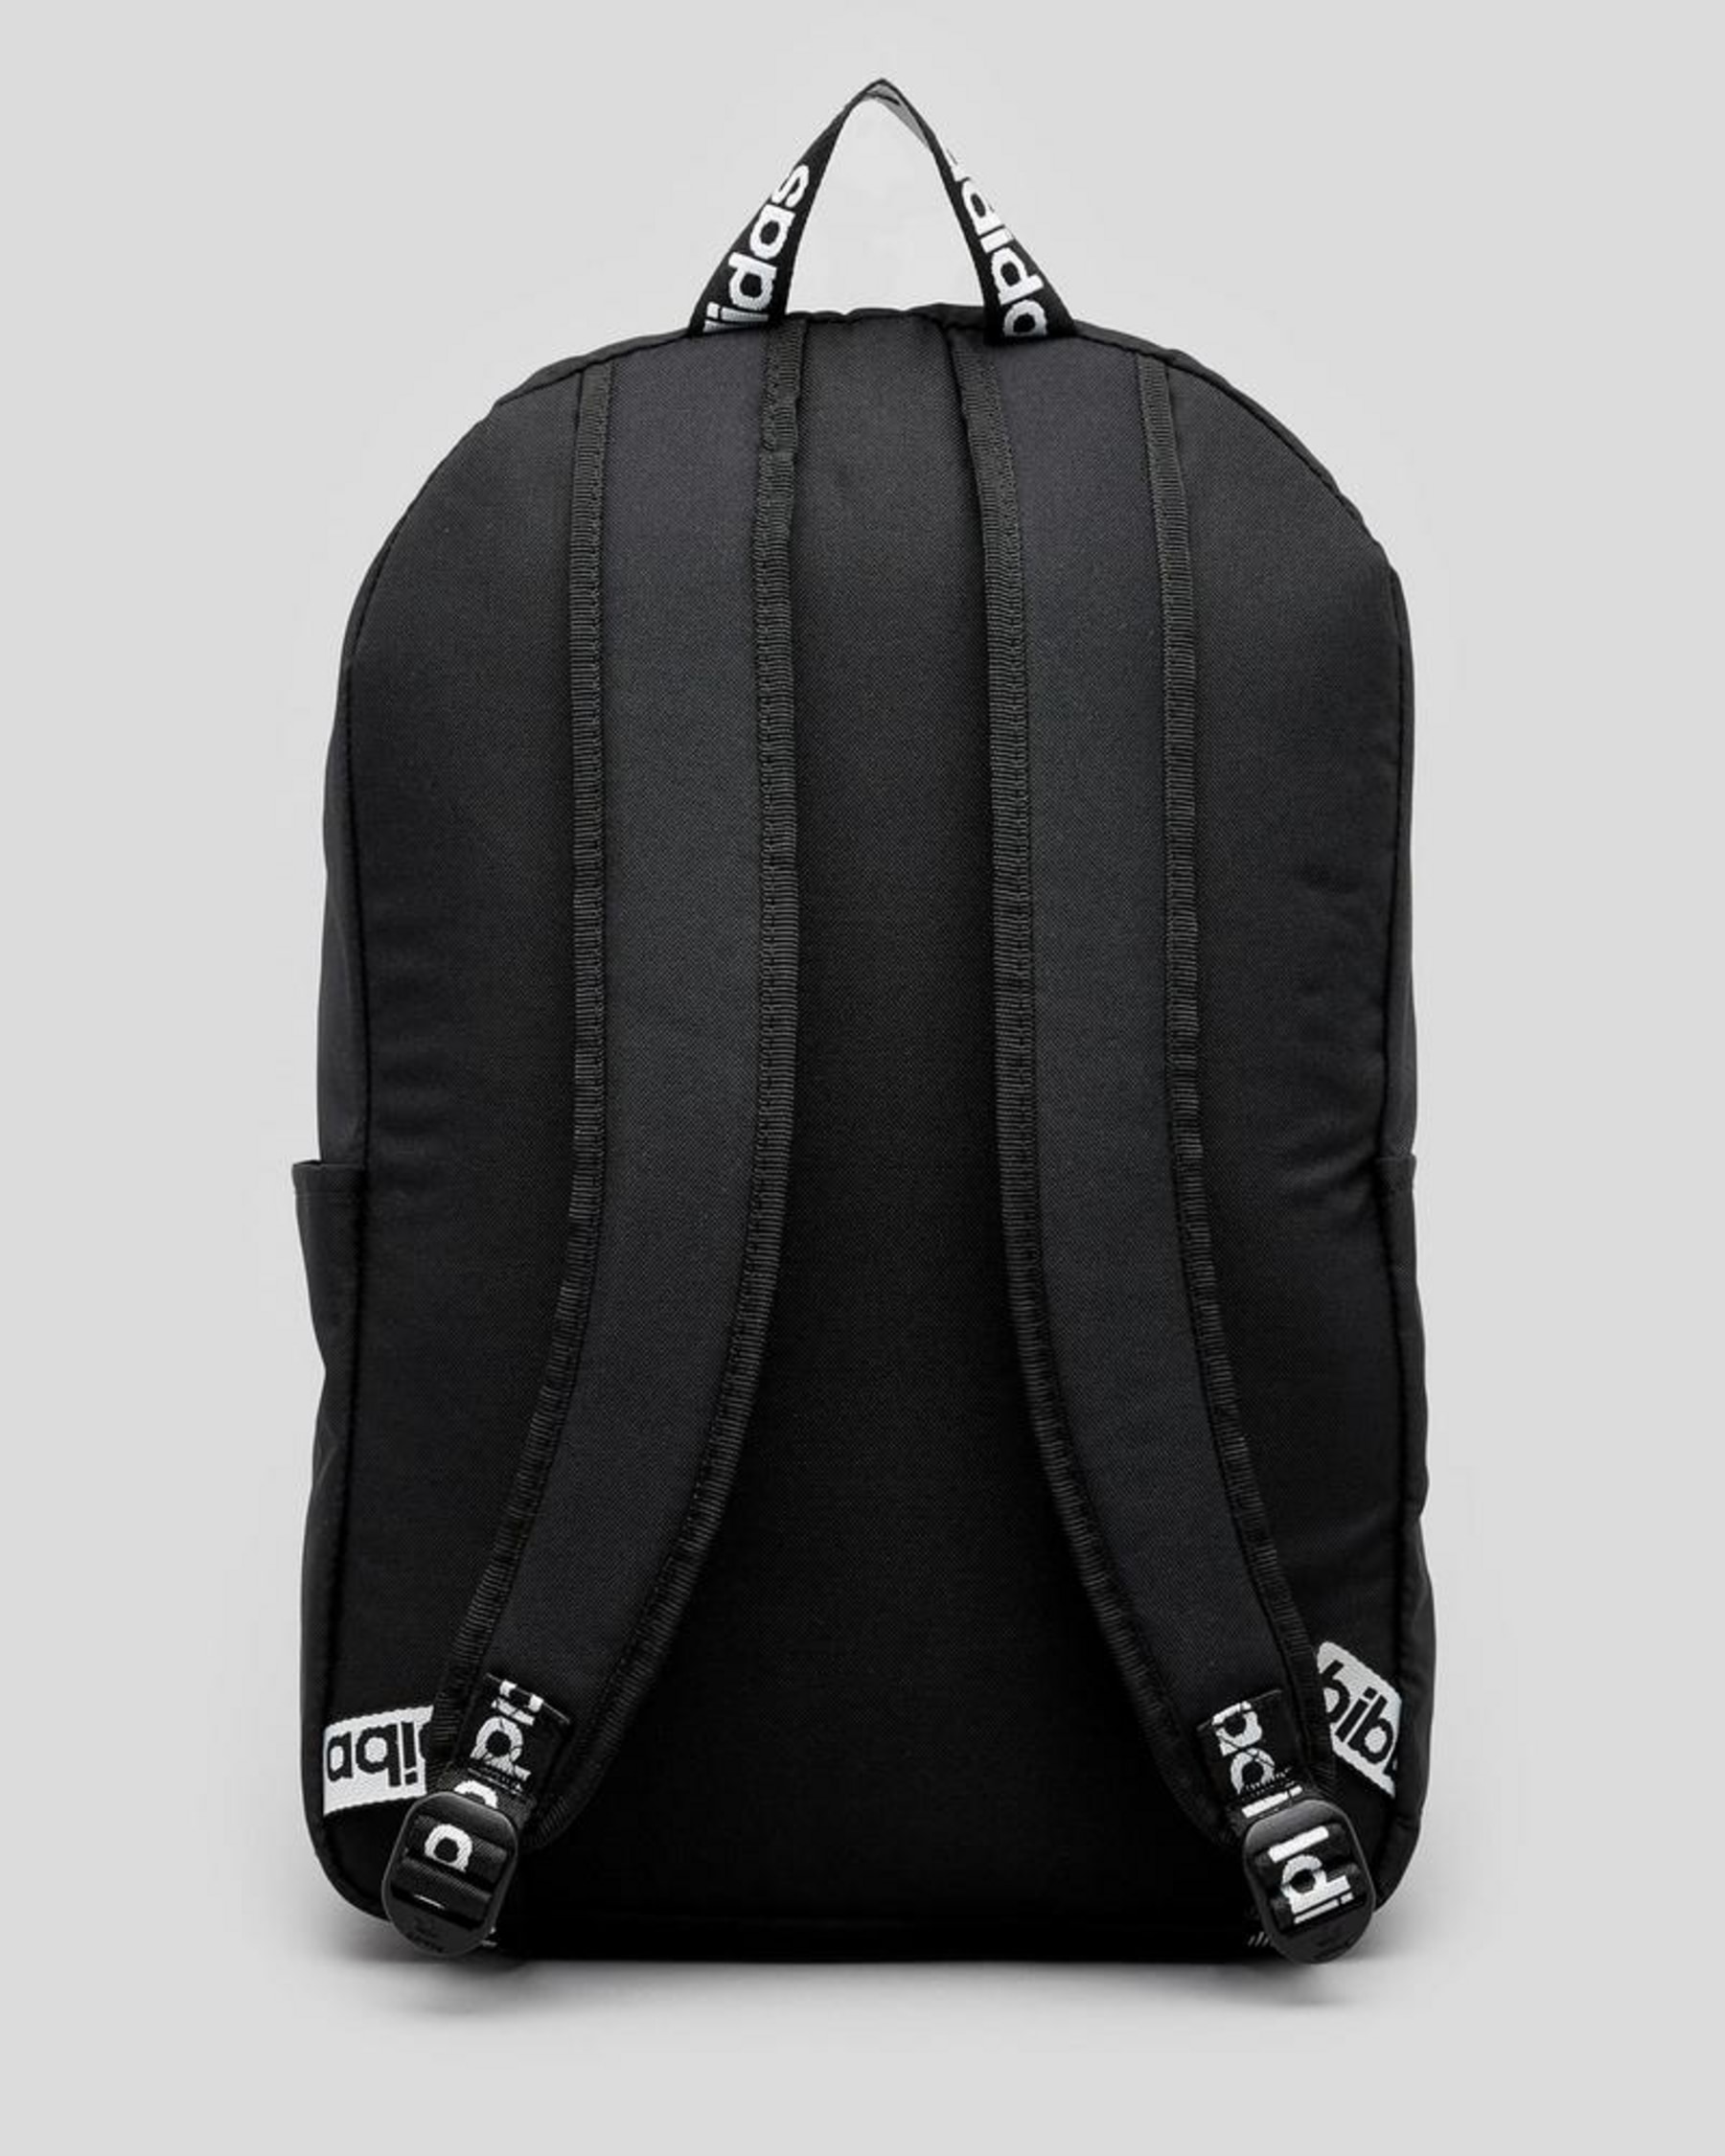 Adidas Adicolor Backpack In Black/white | City Beach Australia